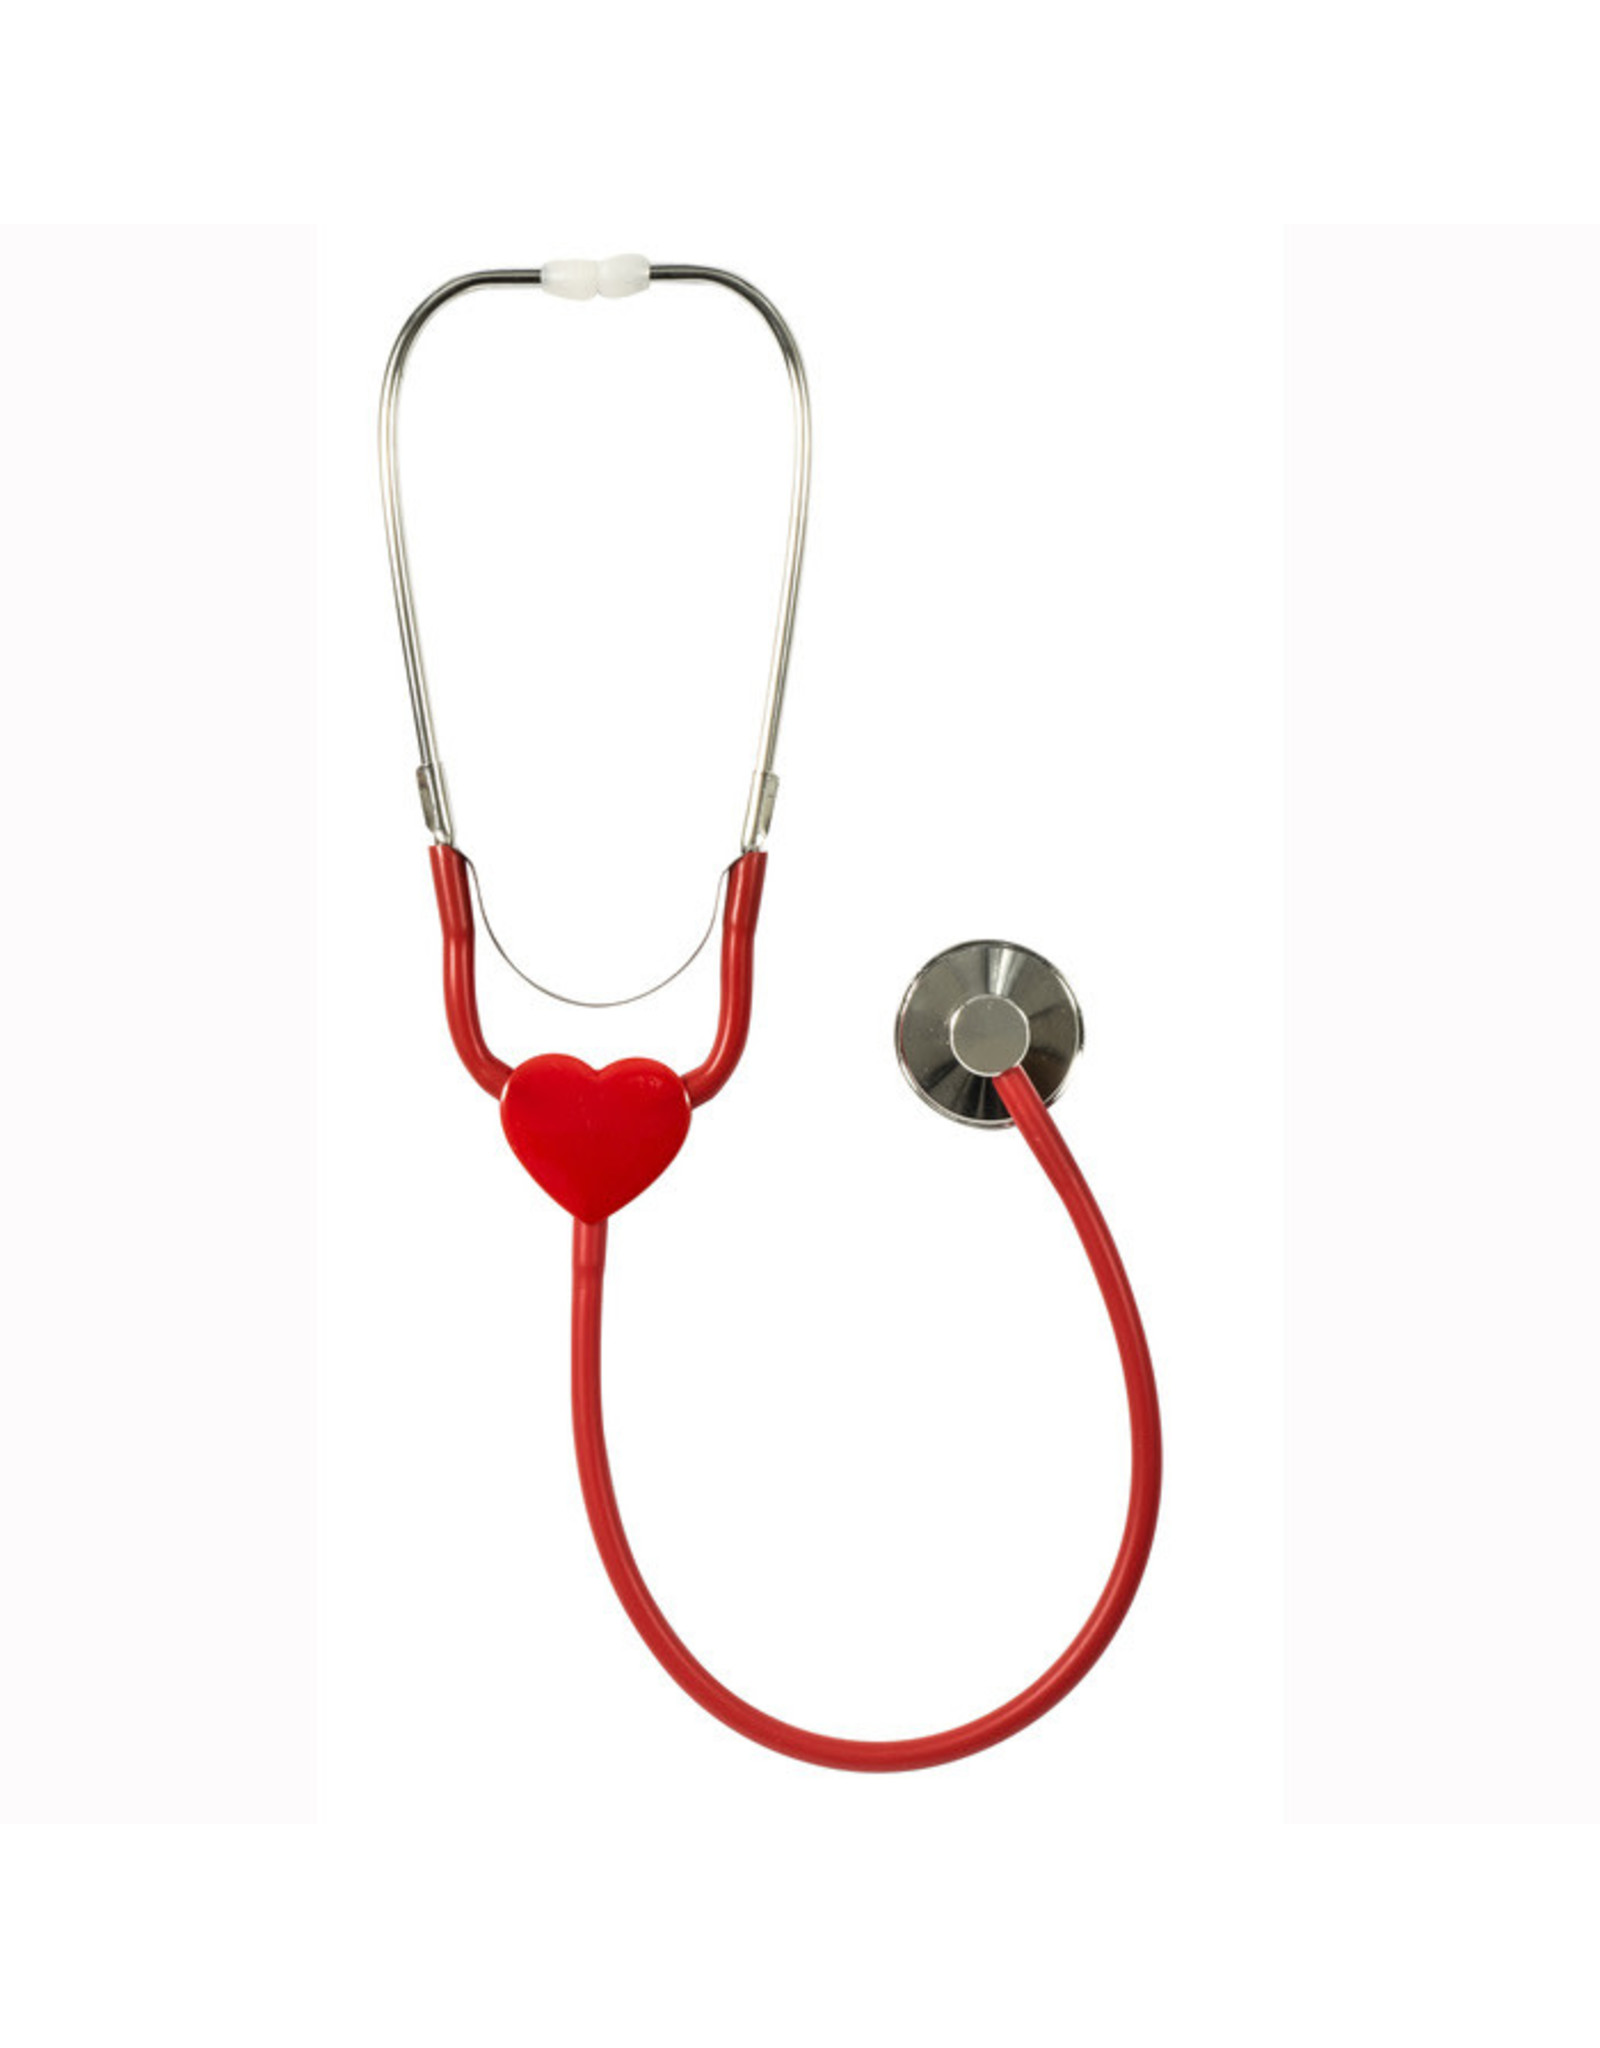 Schylling Little Doctor Stethoscope